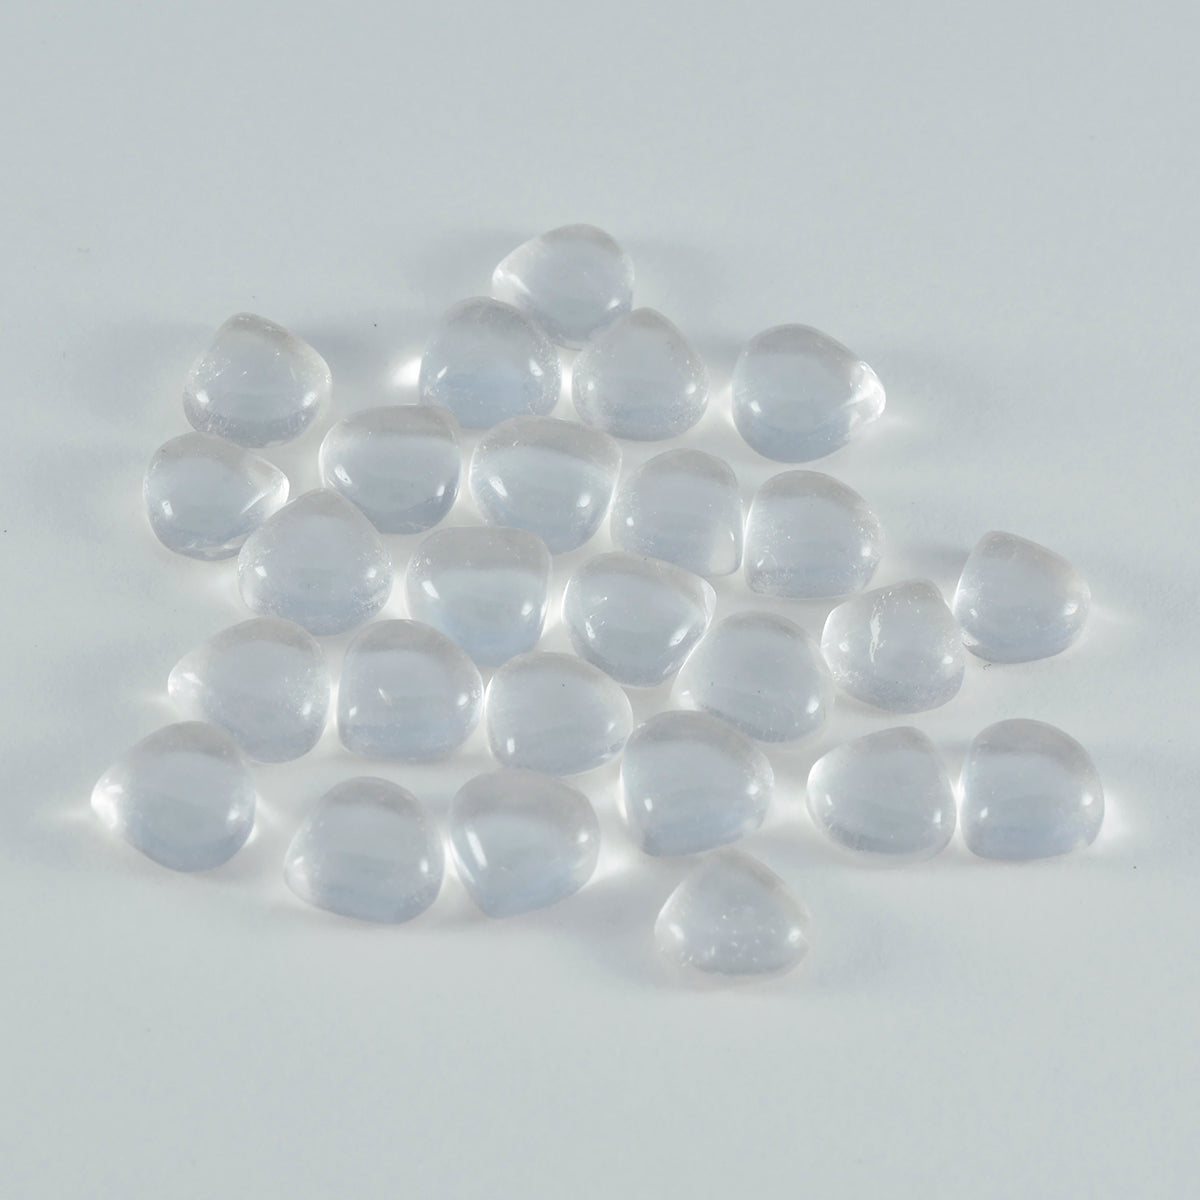 Riyogems 1PC White Crystal Quartz Cabochon 4x4 mm Heart Shape sweet Quality Gems